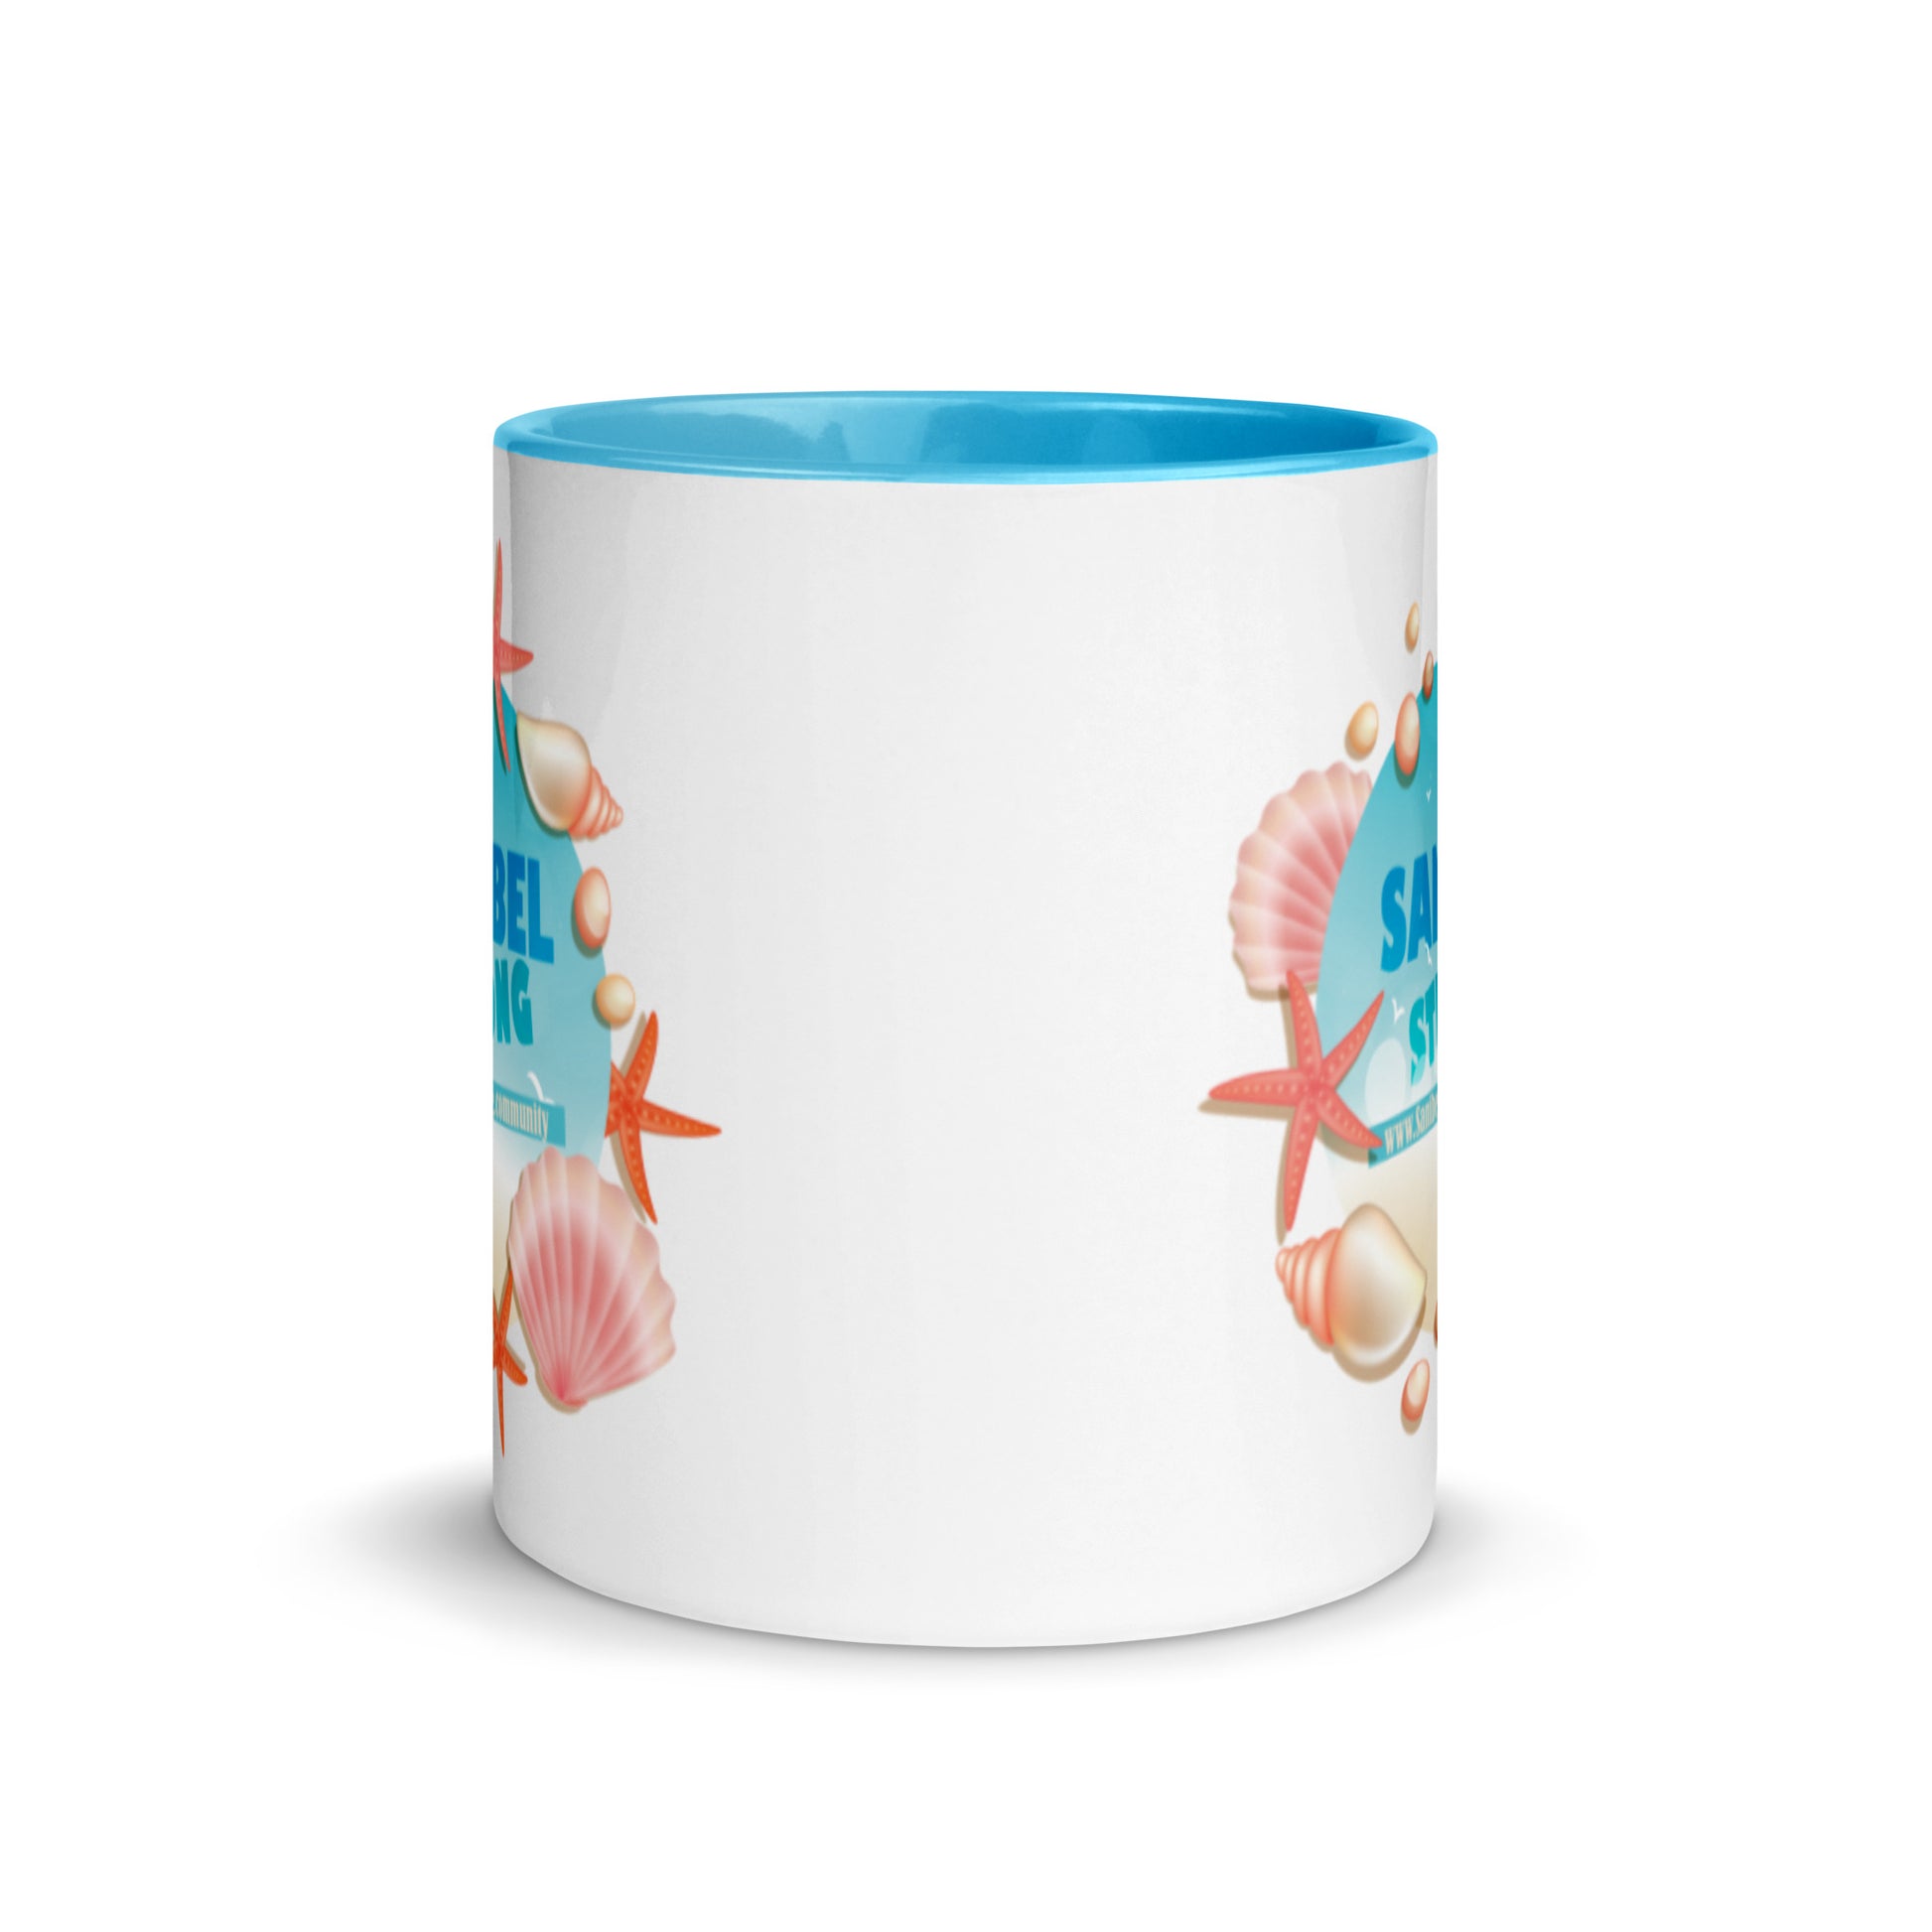 sanibel strong ceramic mug